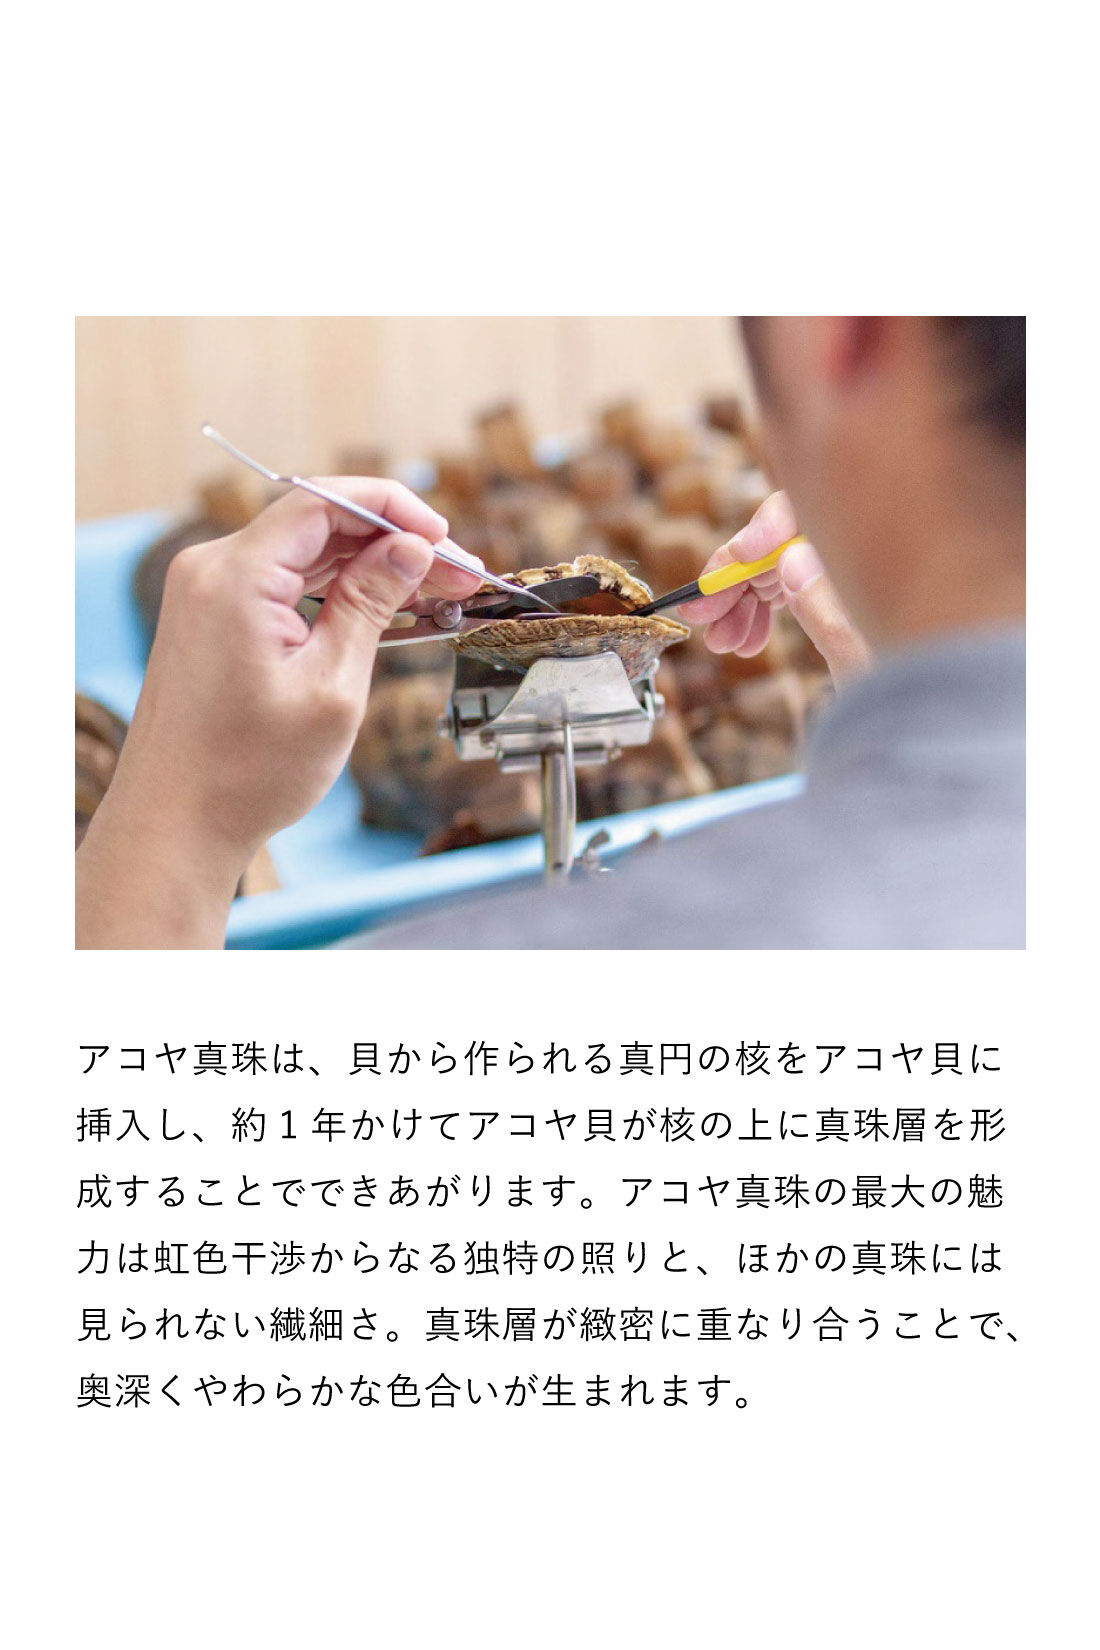 Couturier|自然の造形を愉しむ 日本の海で育った アコヤバロック真珠の会